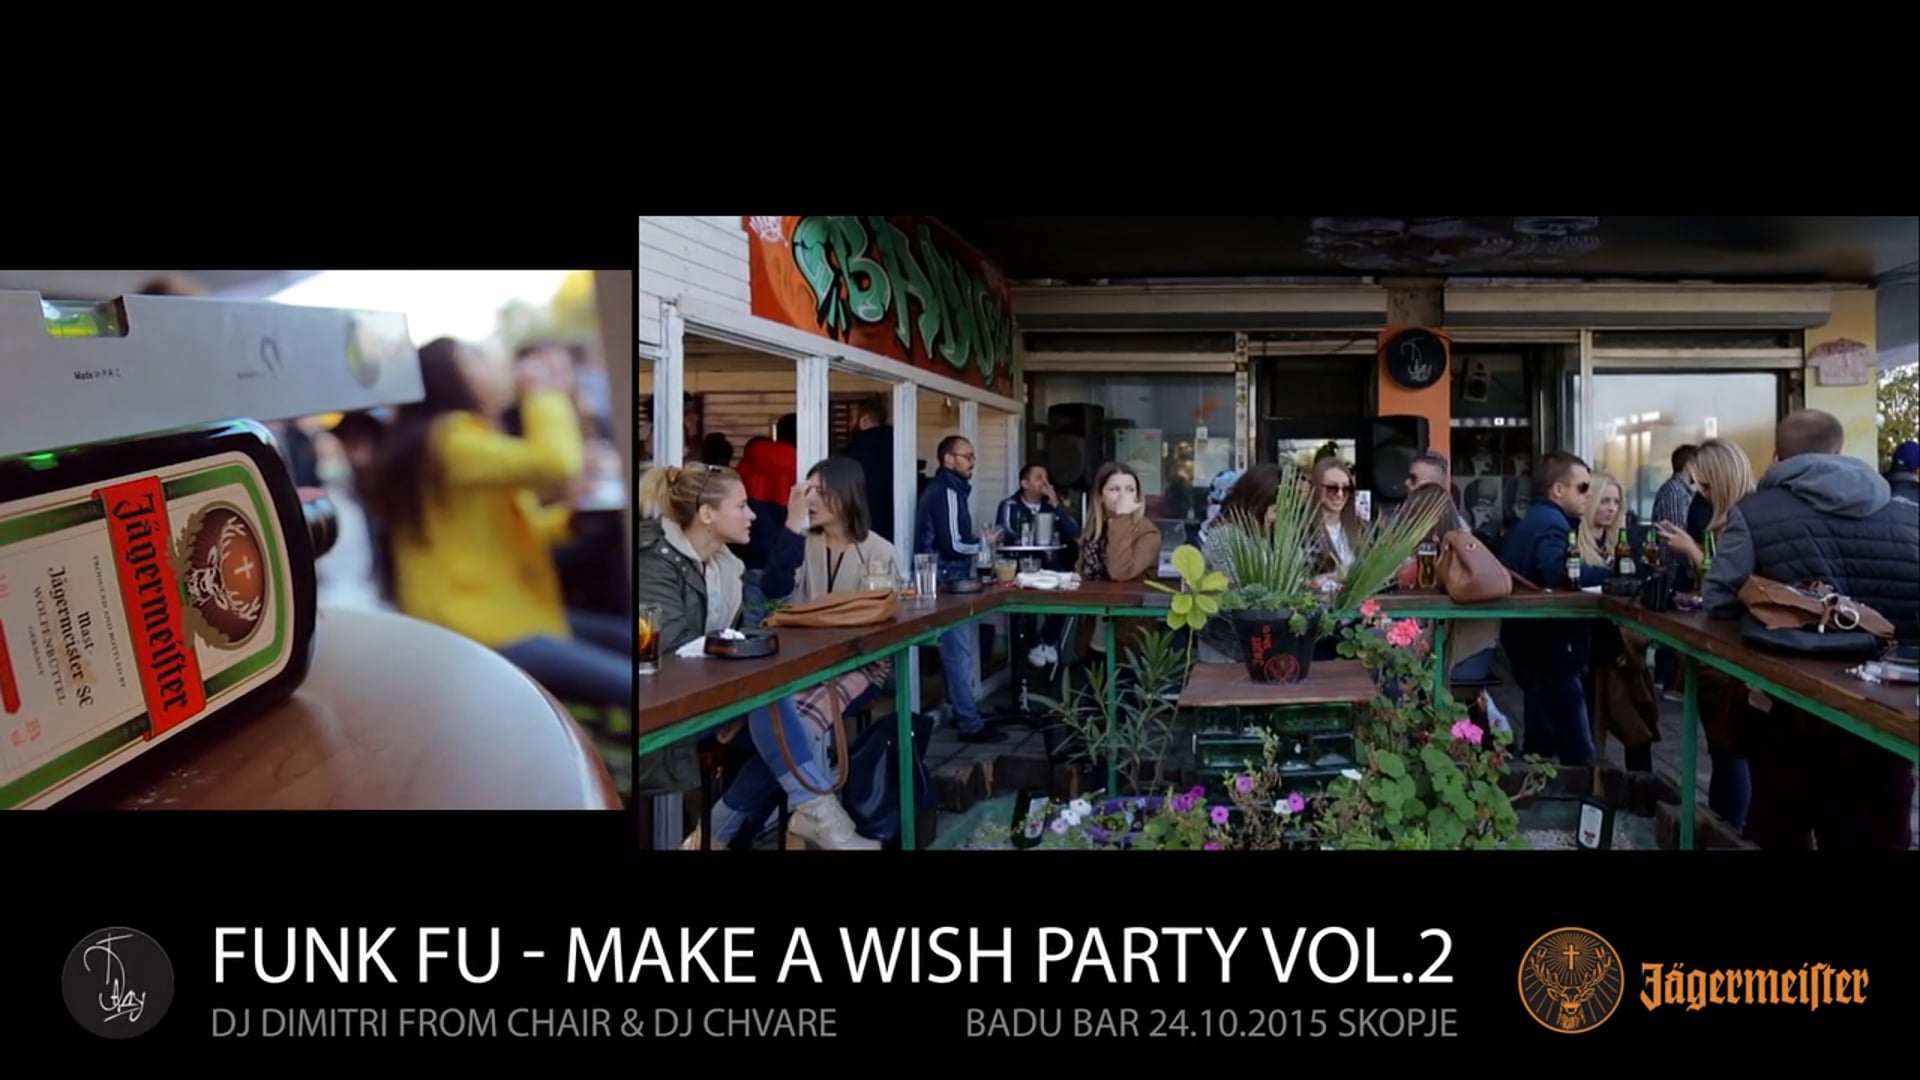 Jagermeister presents Make a wish party vol.2 @ Badu Bar